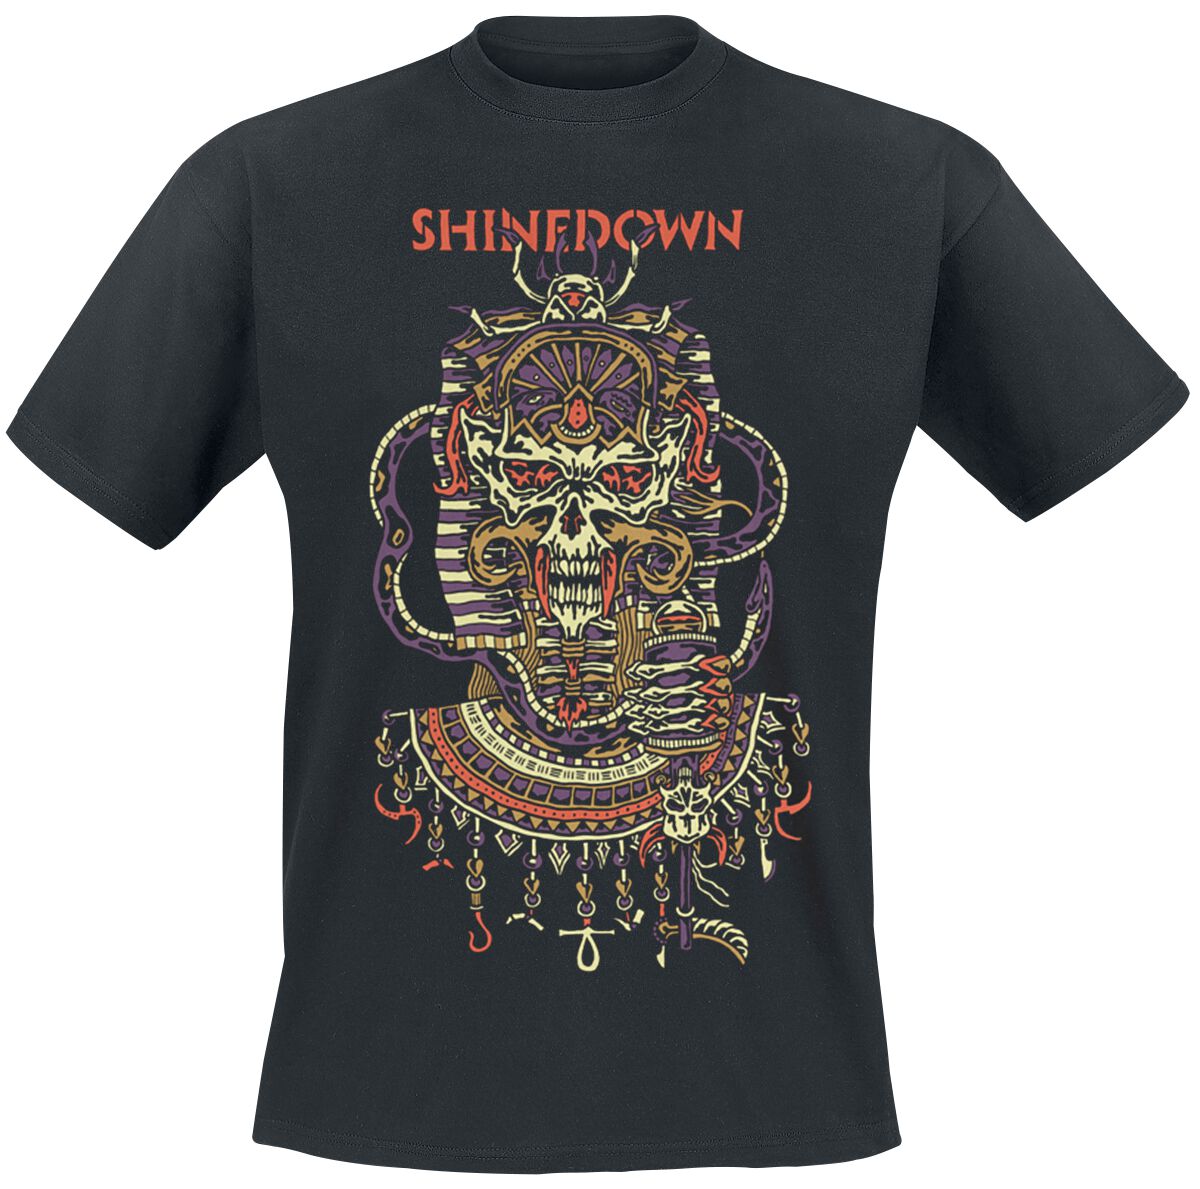 Shinedown Planet Zero Skull T-Shirt black